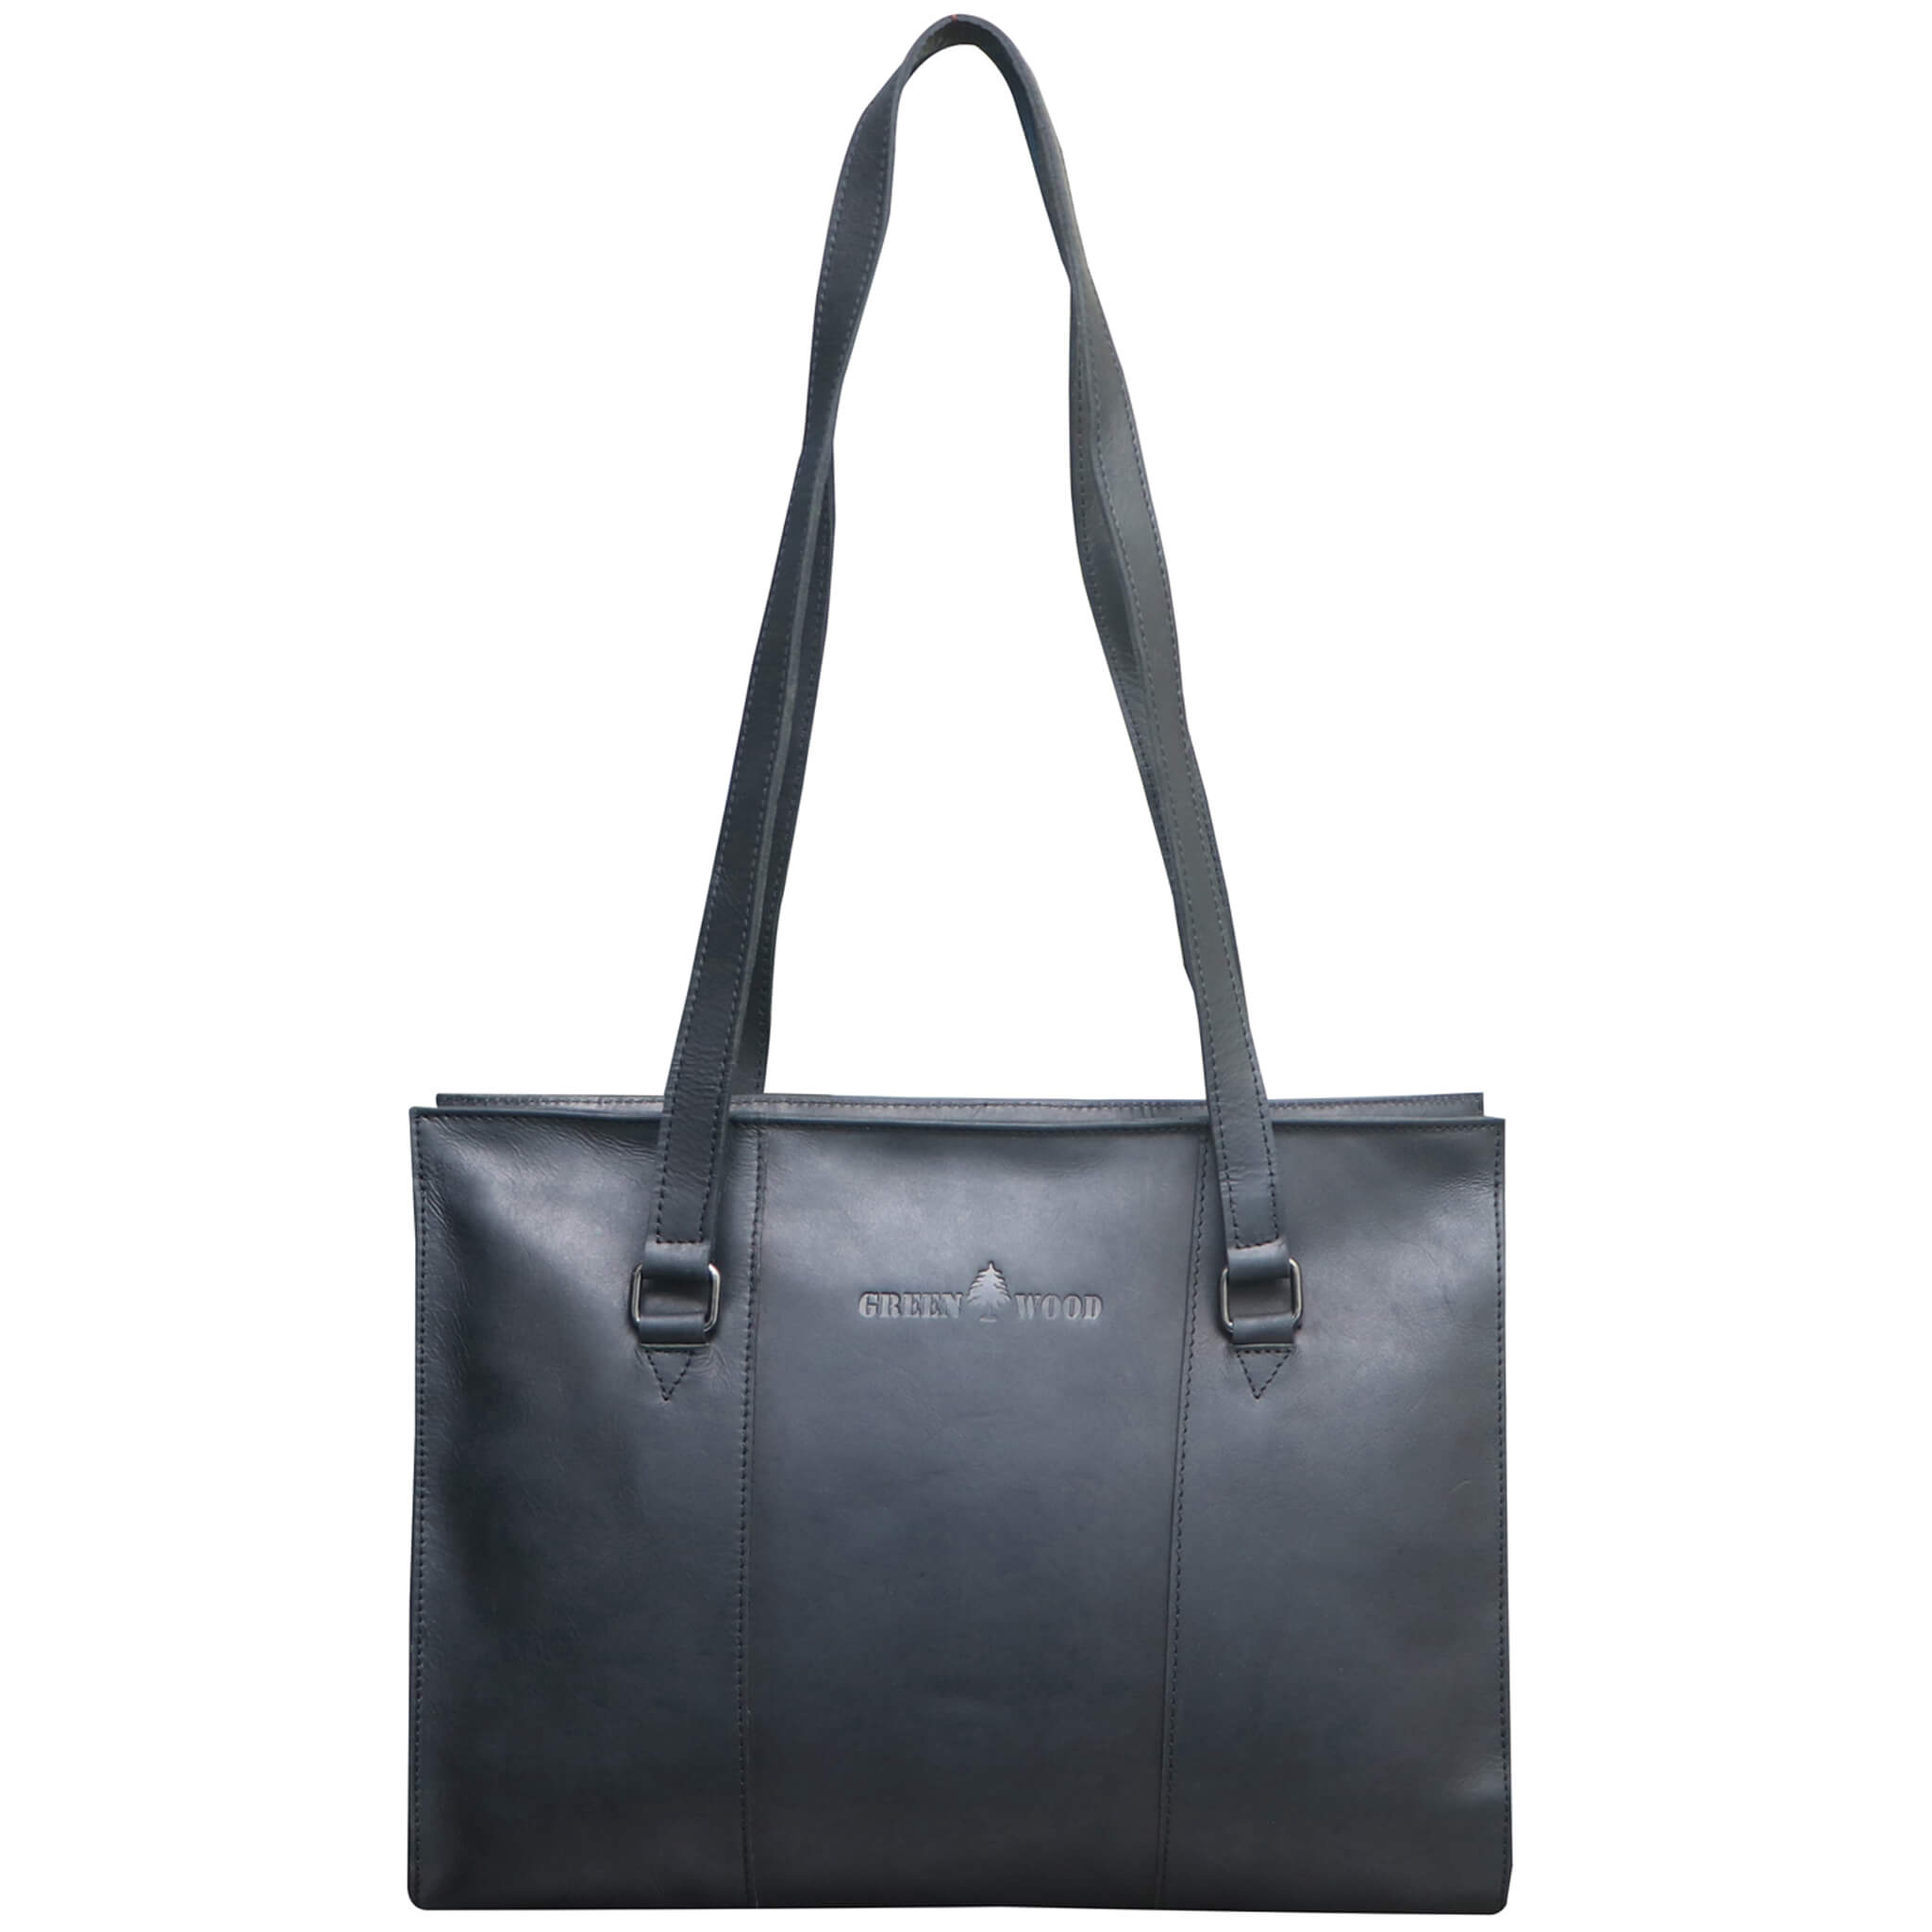 Emily Shopper Bag Women Top Handle Leather Clutch Shoulder Bag